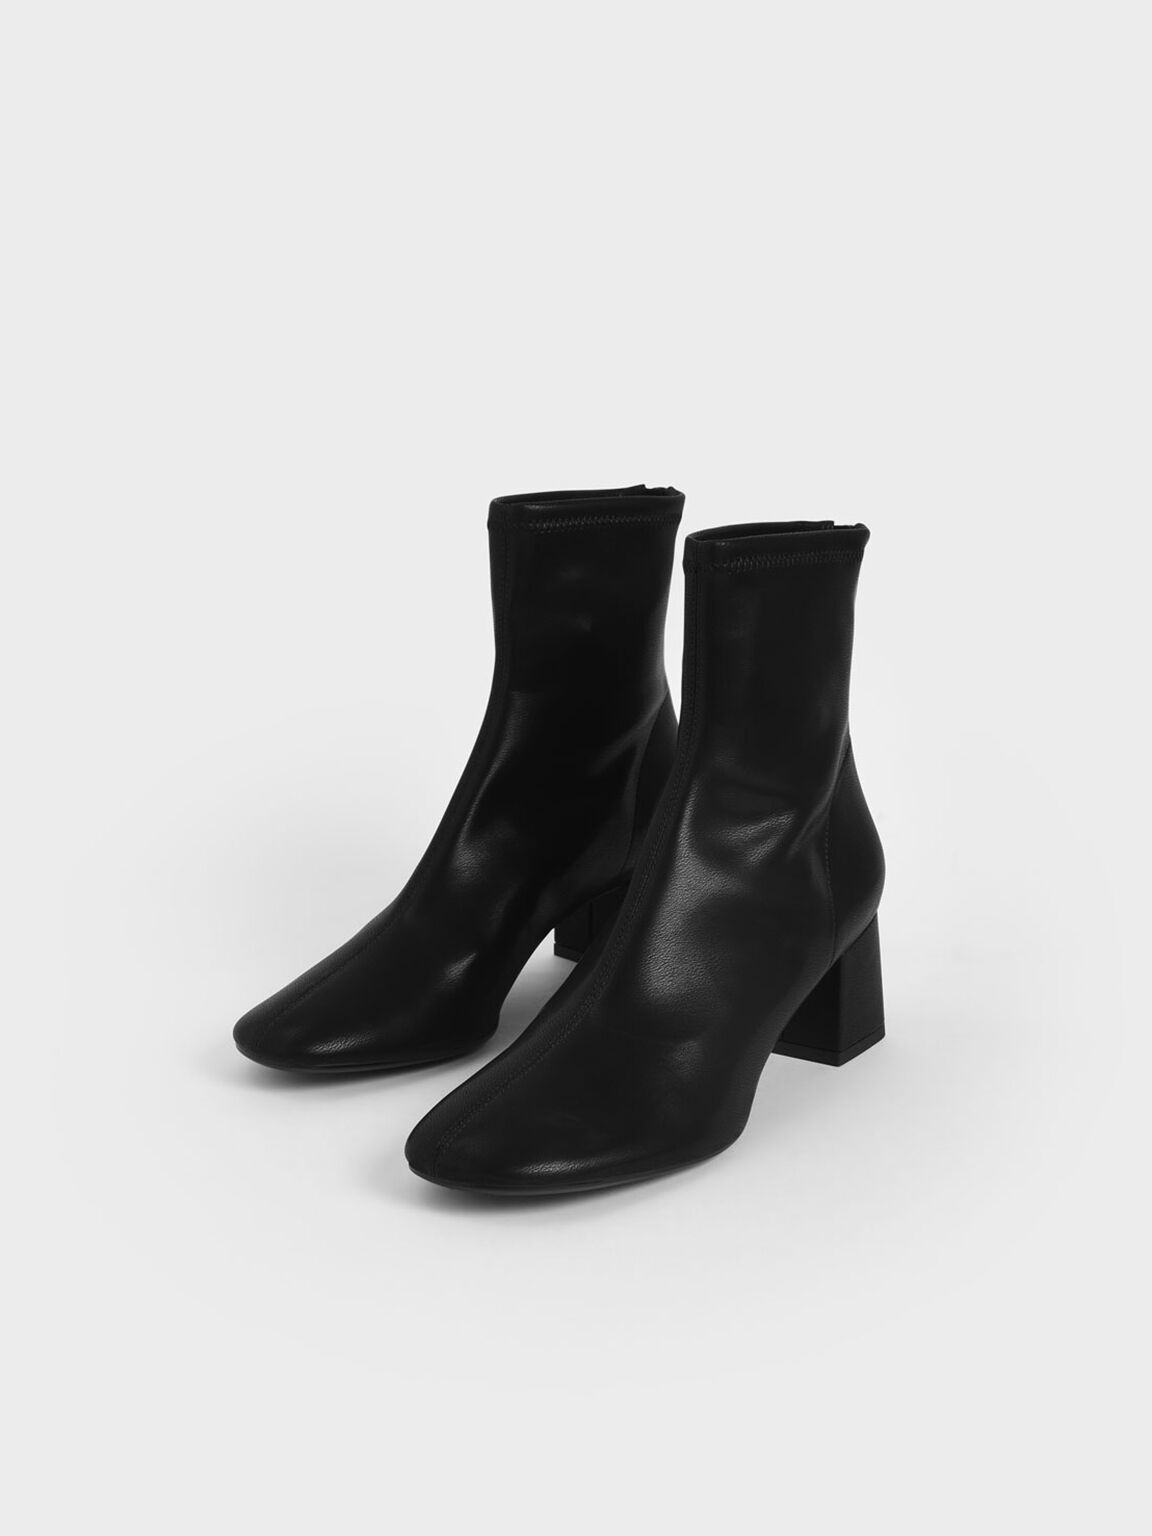 Stitch-Trim Block Heel Ankle Boots, Black, hi-res